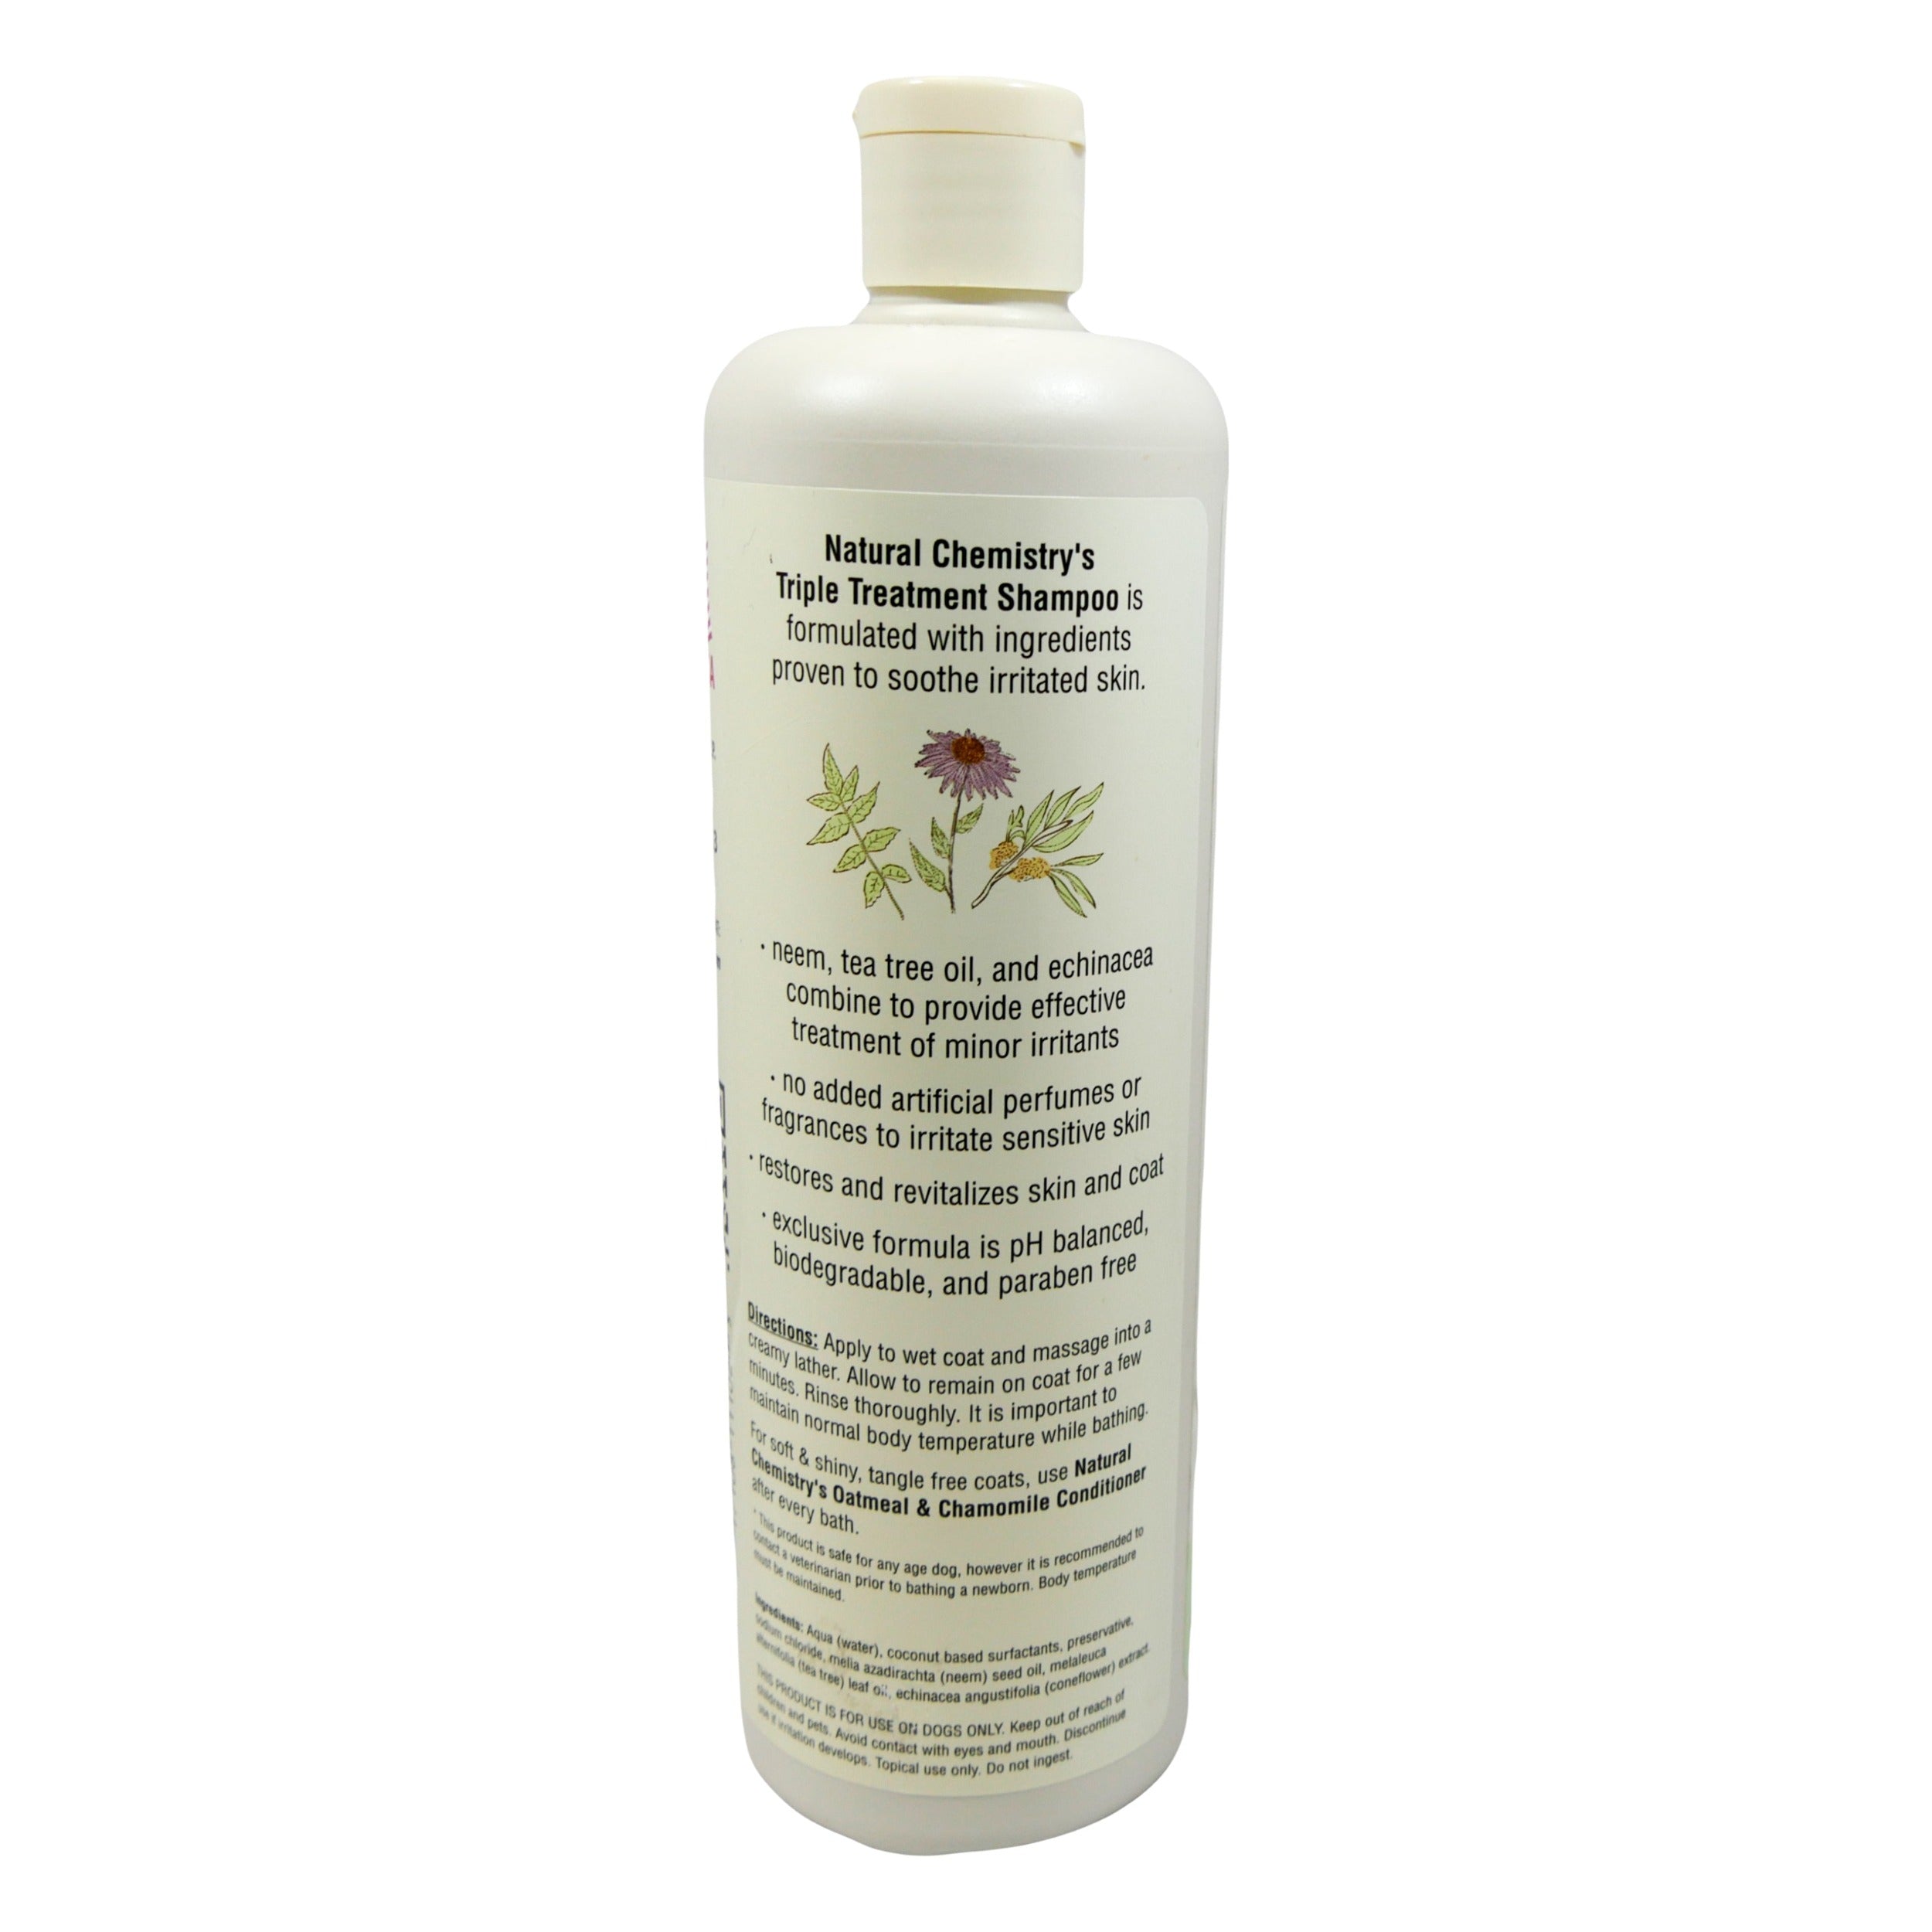 Natural Chemistry Natural Triple Treatment Shampoo 16Oz